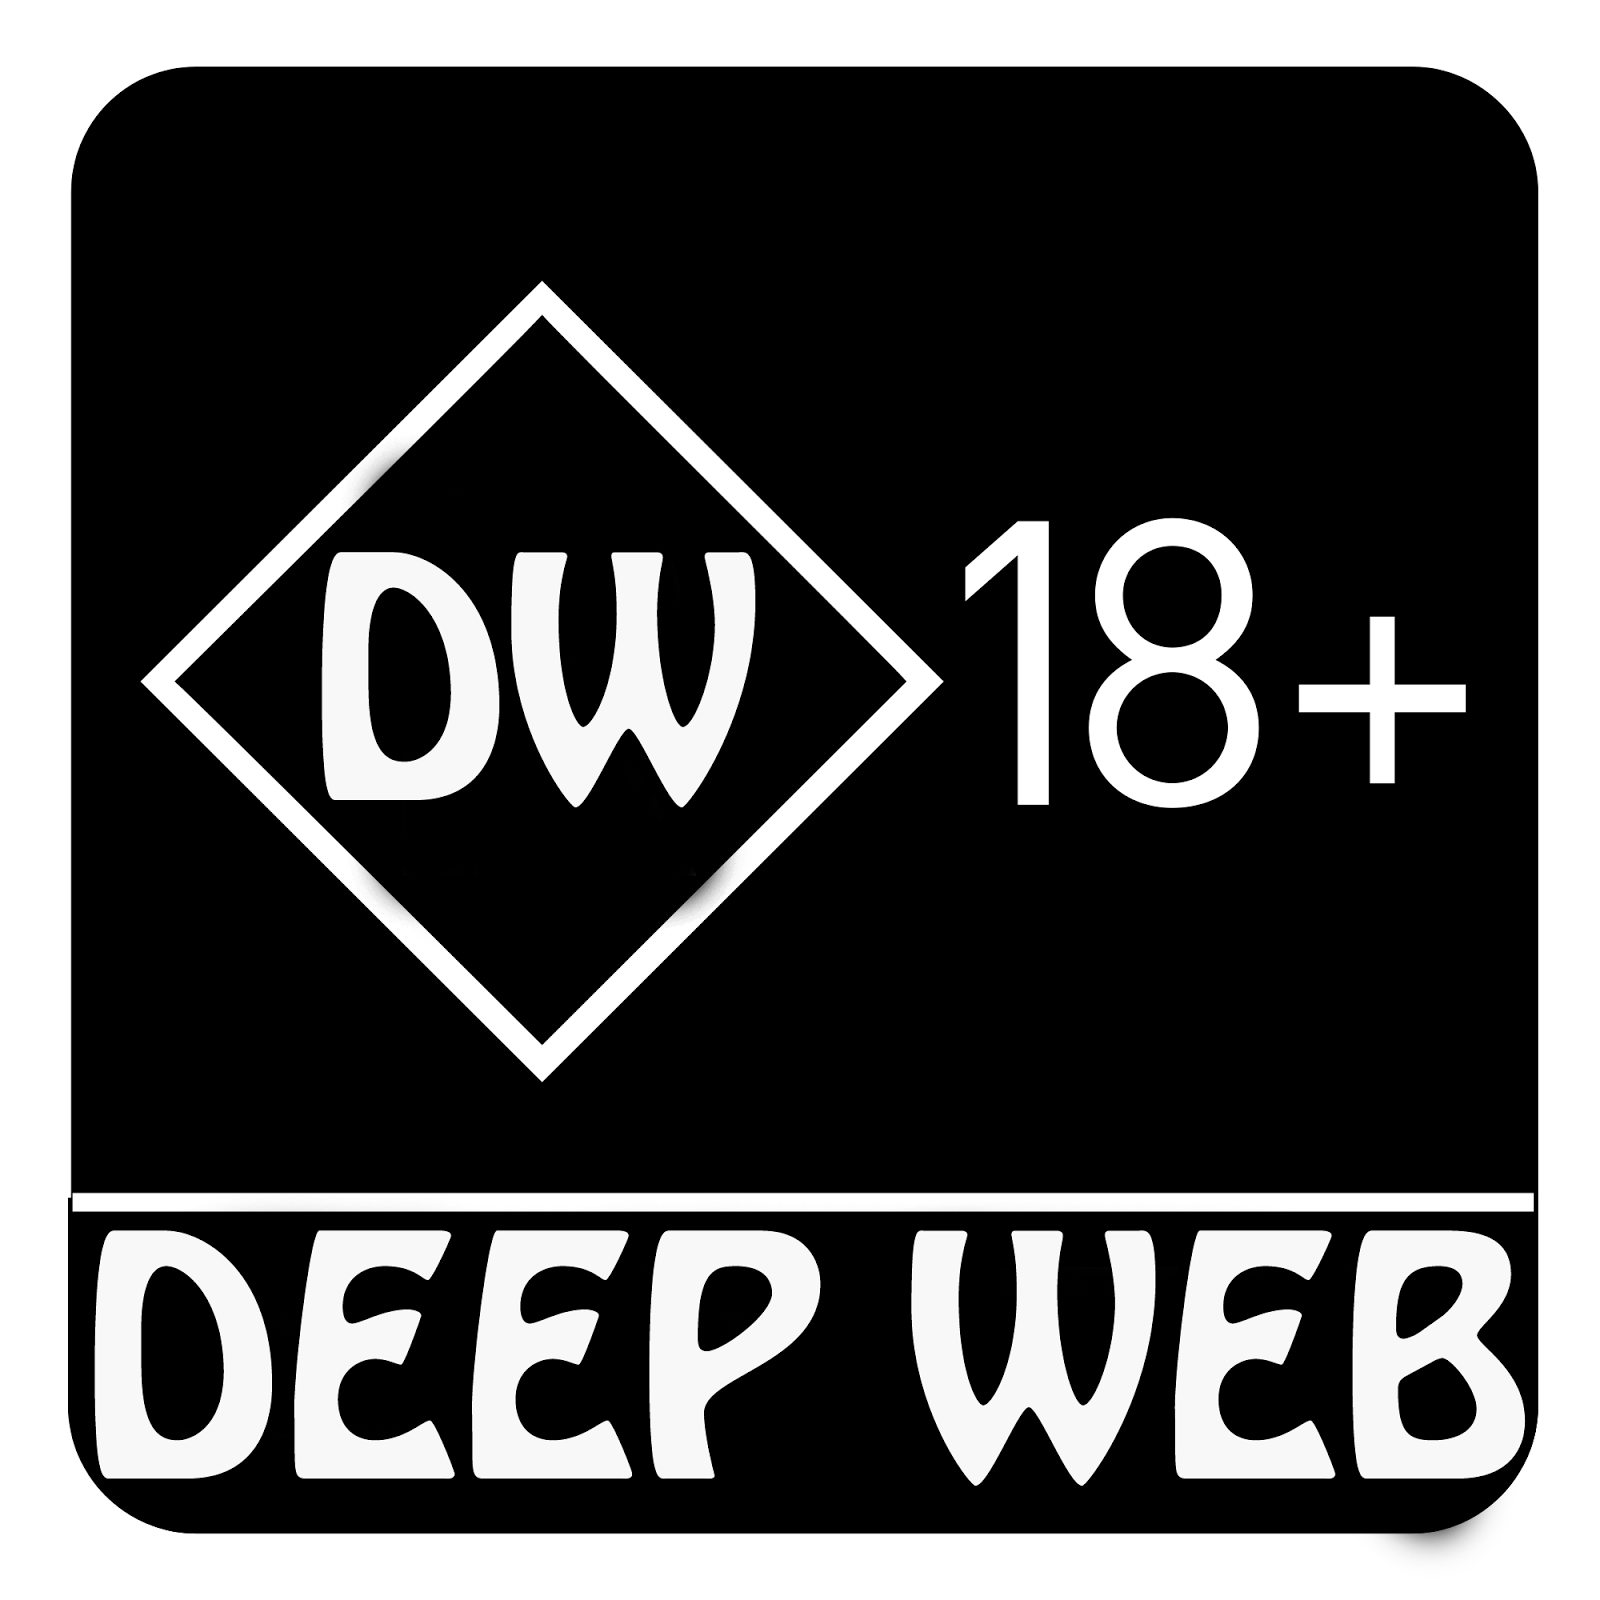 Web 18. Deep web giriş. Deep web logo. Глубокий интернет голая.